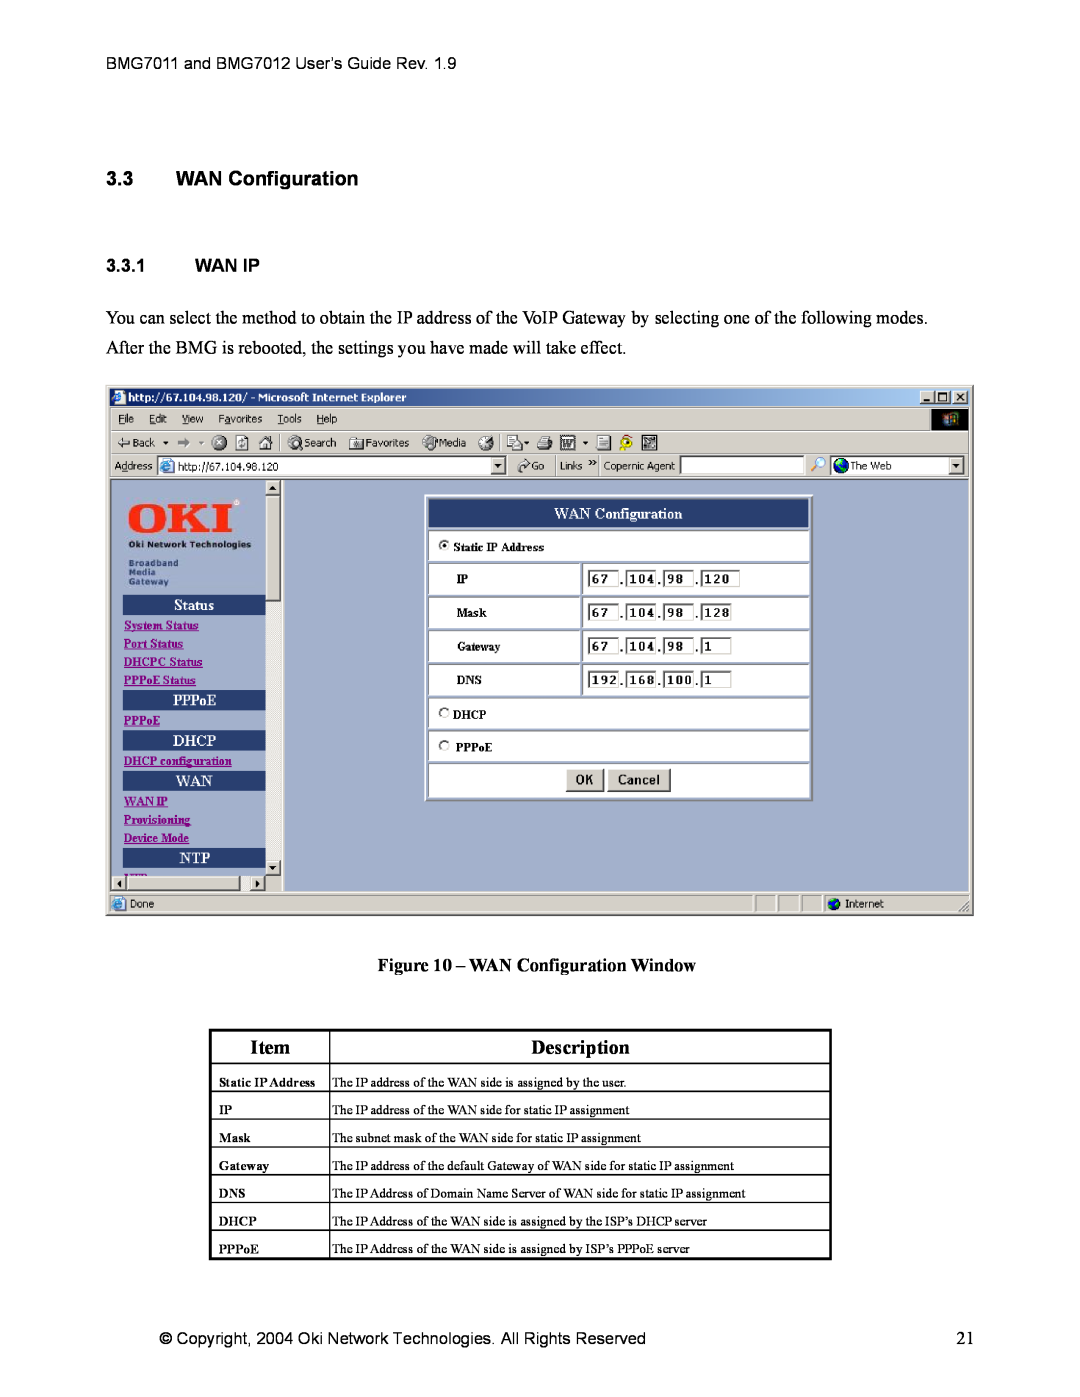 Oki BMG7011, BMG7012 manual 3.3WAN Configuration, 3.3.1WAN IP, WAN Configuration Window, Description 